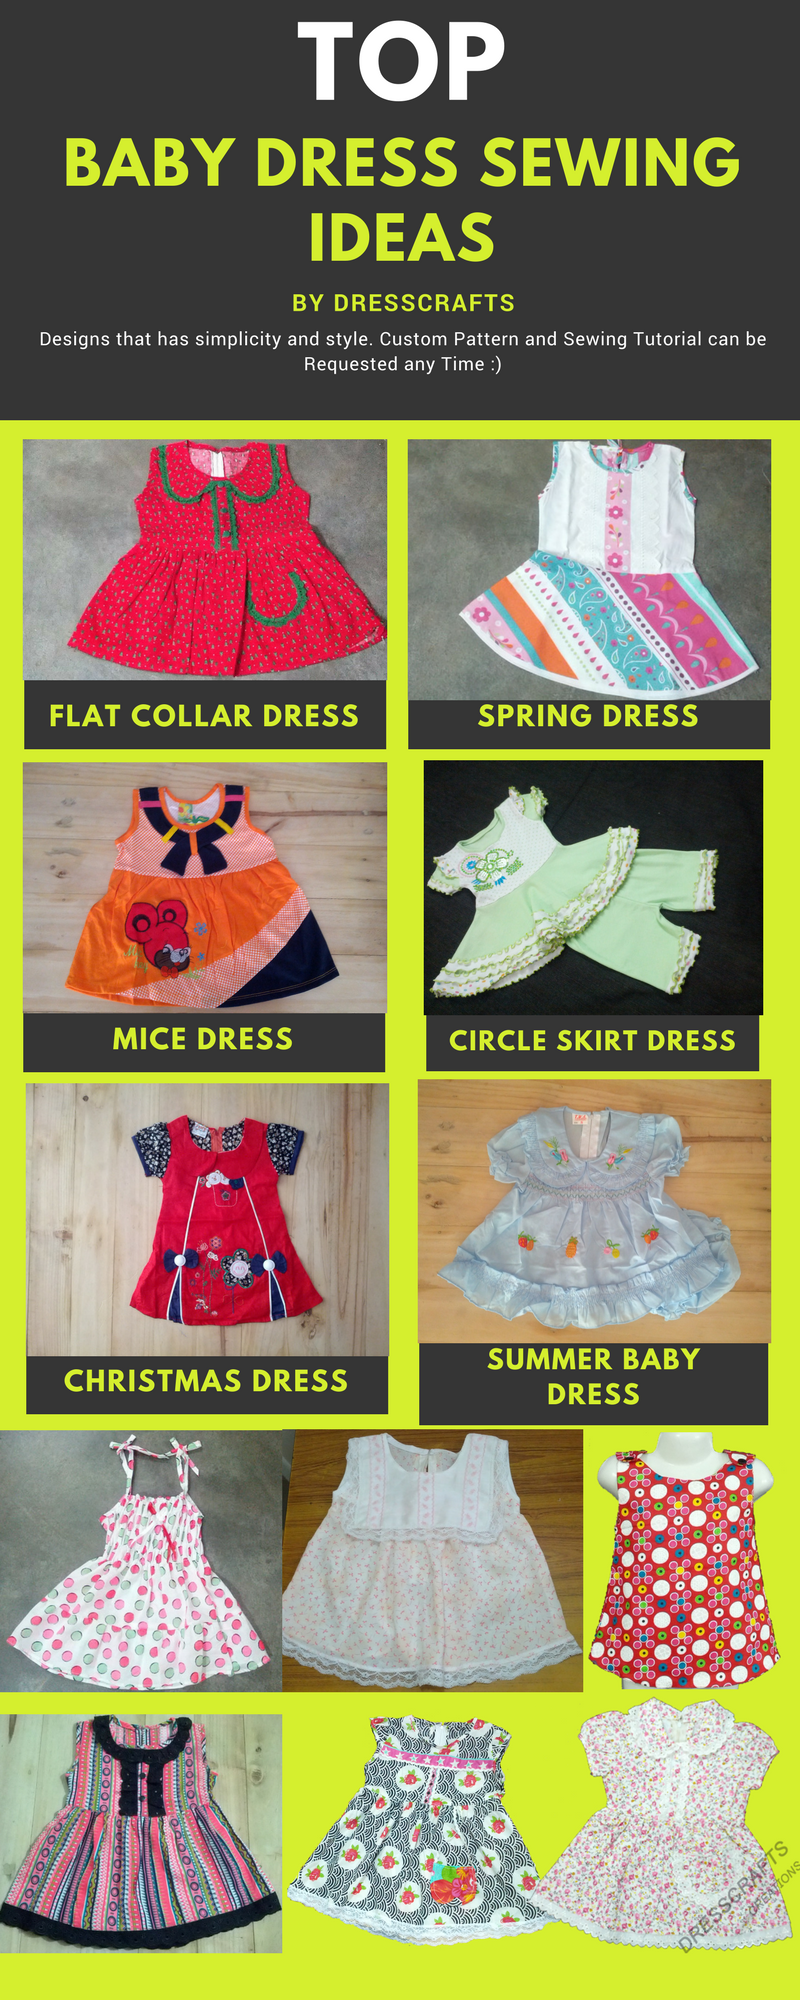 Baby Dress Ideas